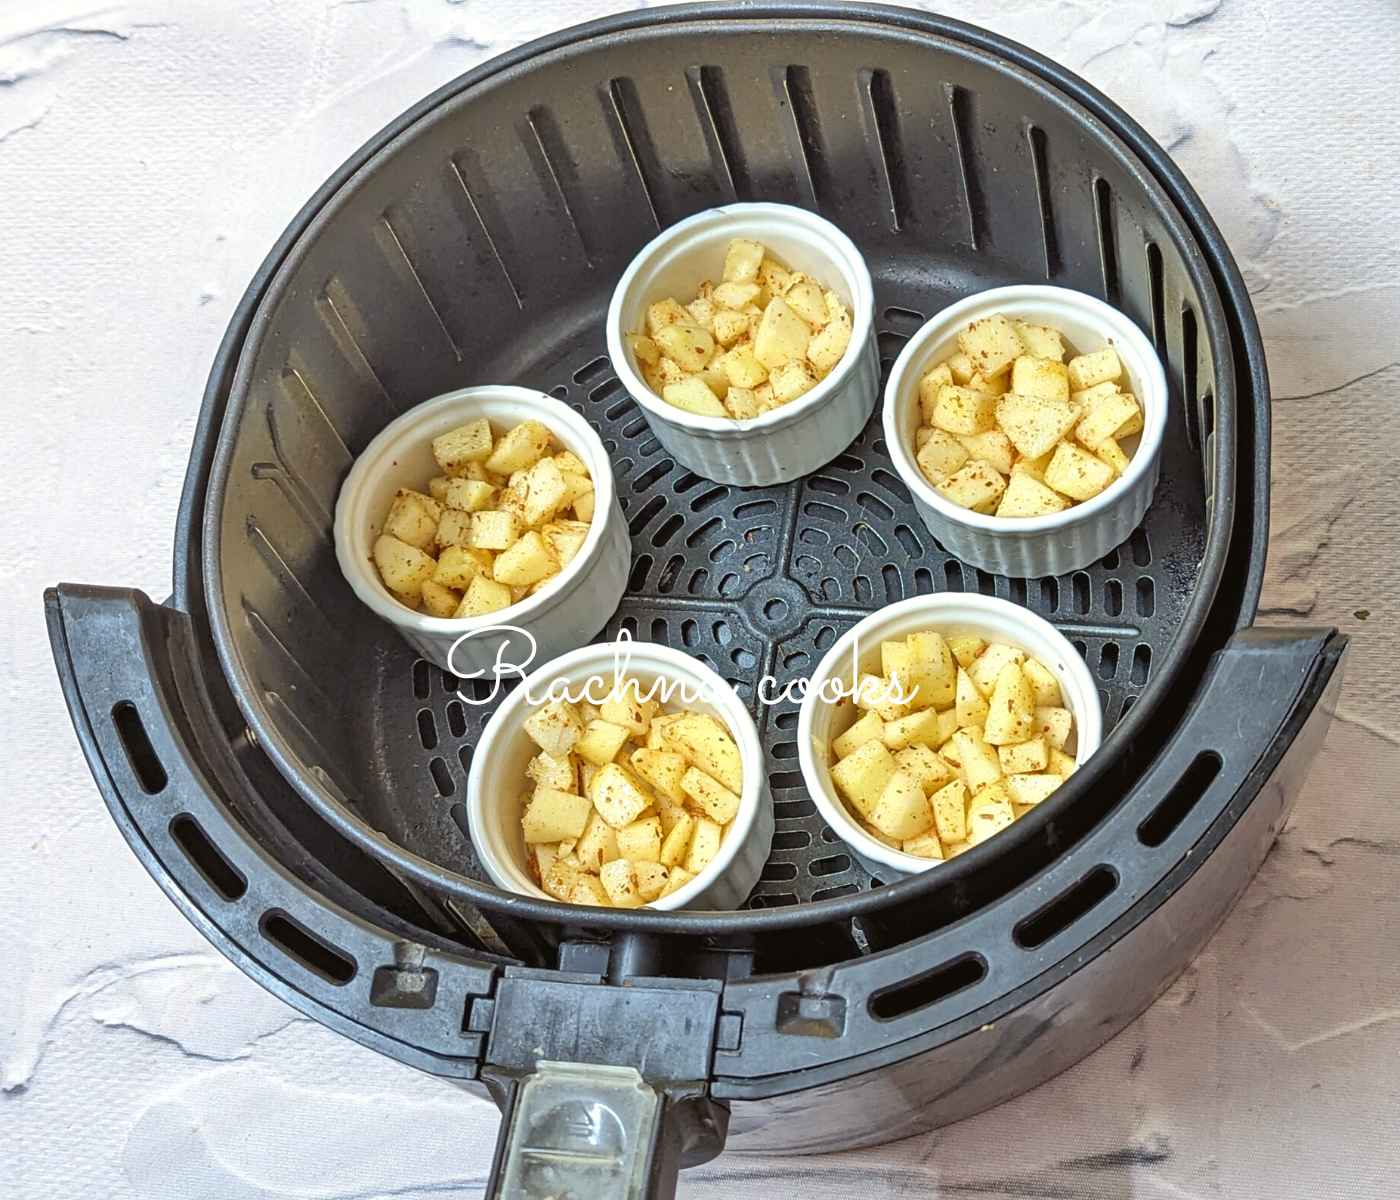 5 ramekins with spiced apple cubes in air fryer basket